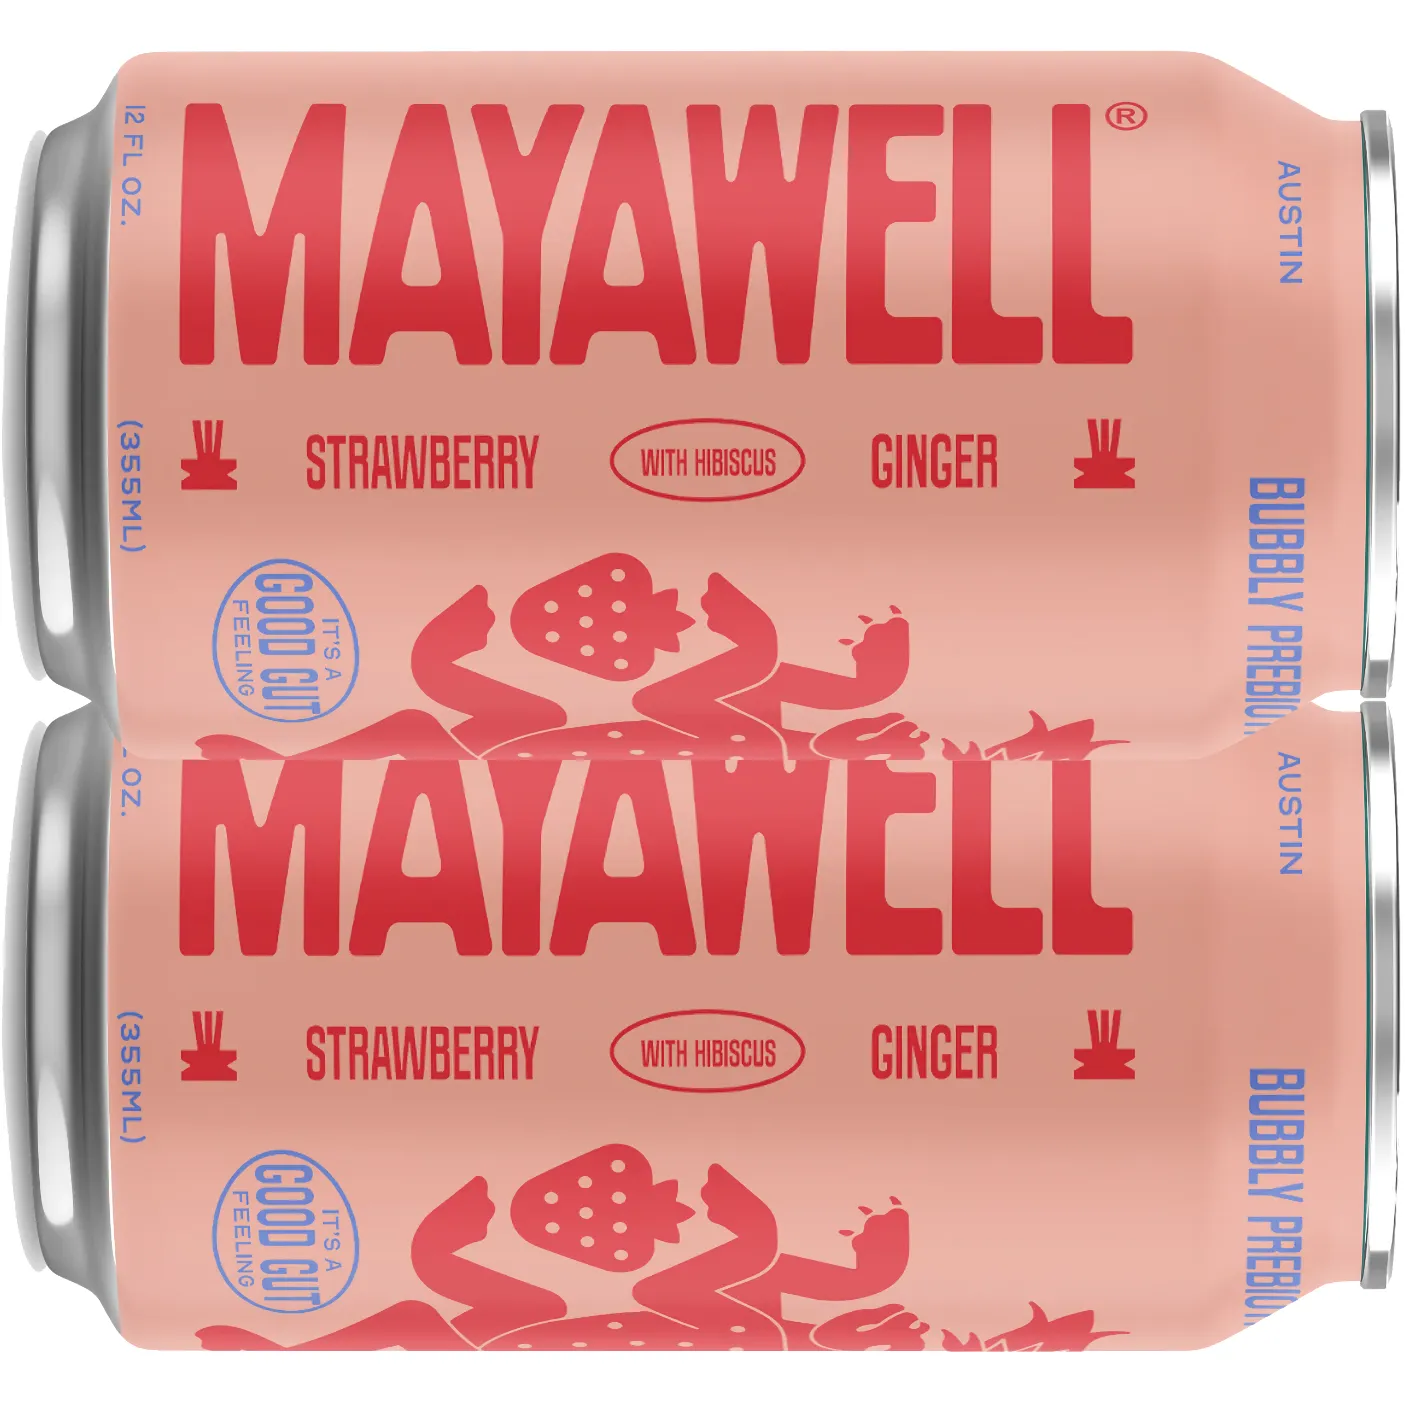 Free Mayawell Delicious Prebiotic Beverages